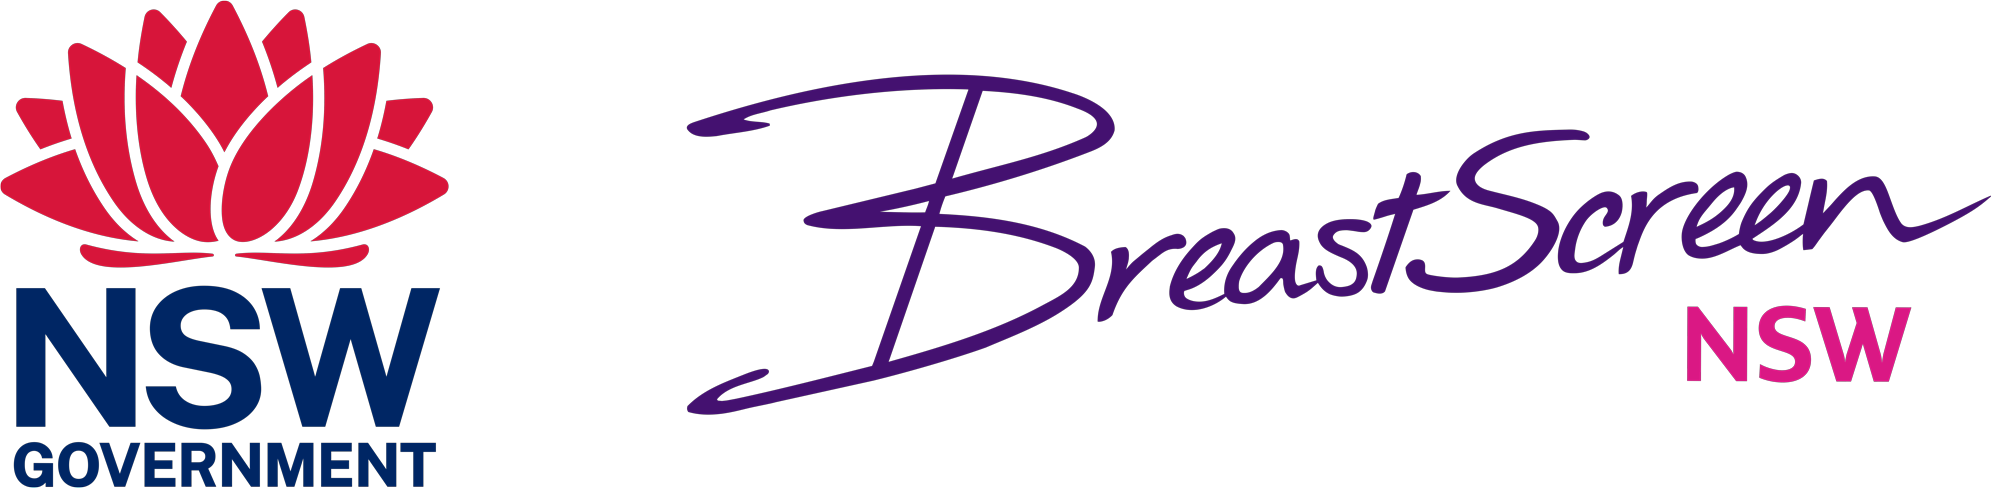 Breast Screen logo